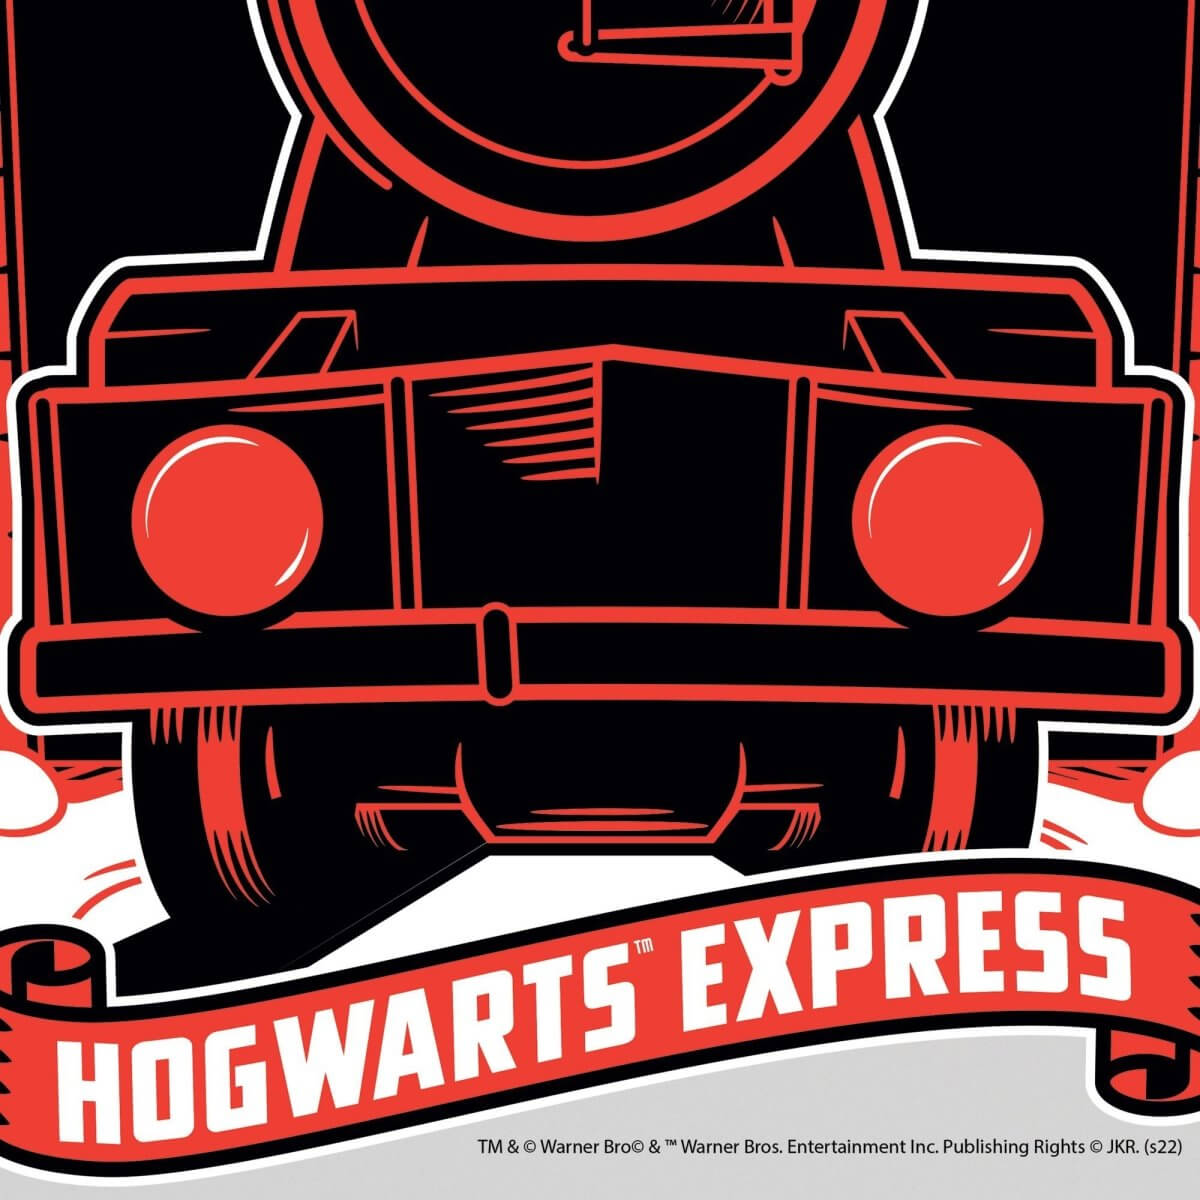 Harry Potter Vinyl Sticker Set 9 Stickers Included - .de